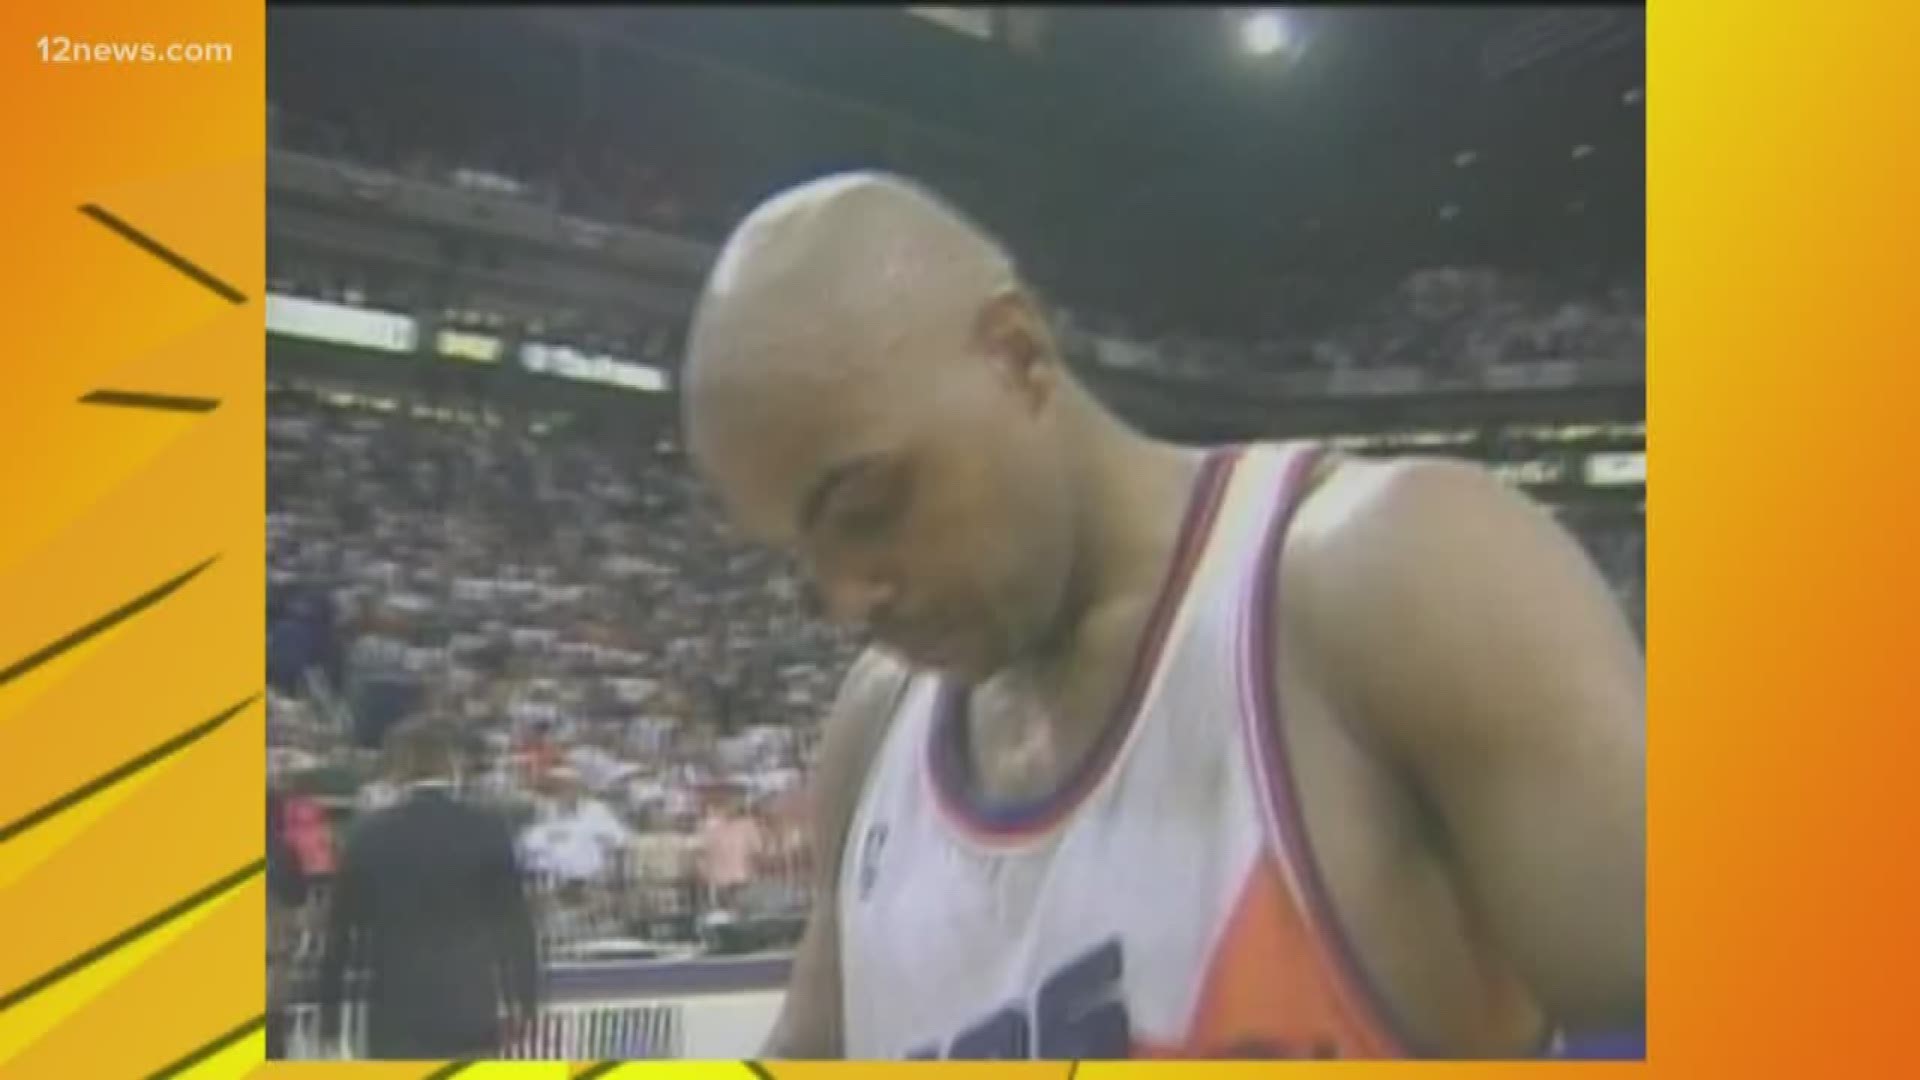 The Last Dance: Michael Jordan's history against the Phoenix Suns